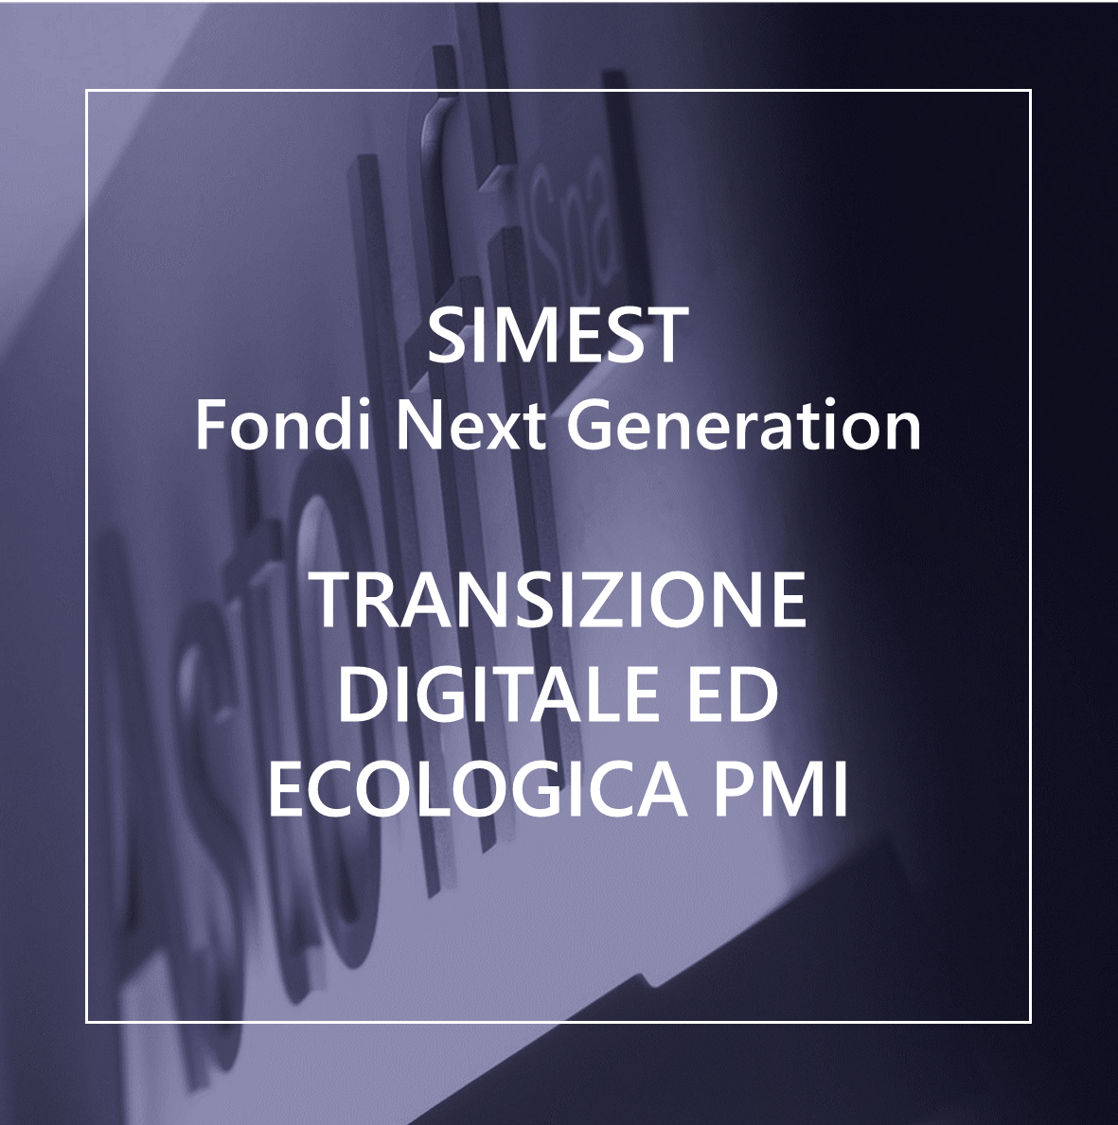 SIMEST Fondi Next Generation - TRANSIZIONE DIGITALE ED ECOLOGICA PMI